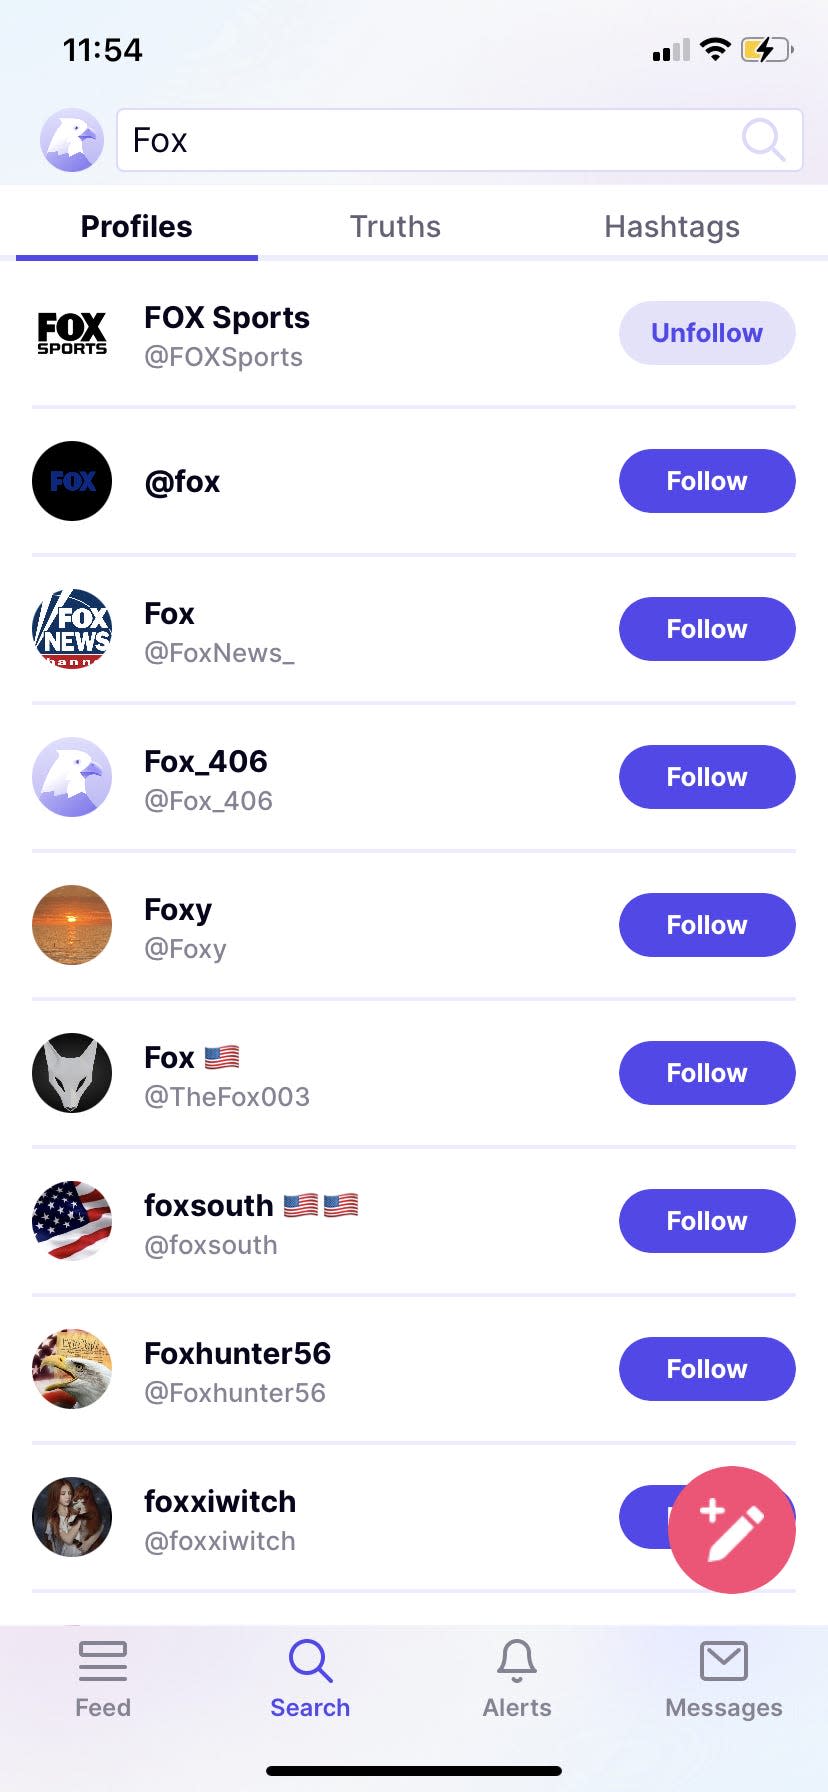 Screenshot of profile search for Fox News yields no verified accounts